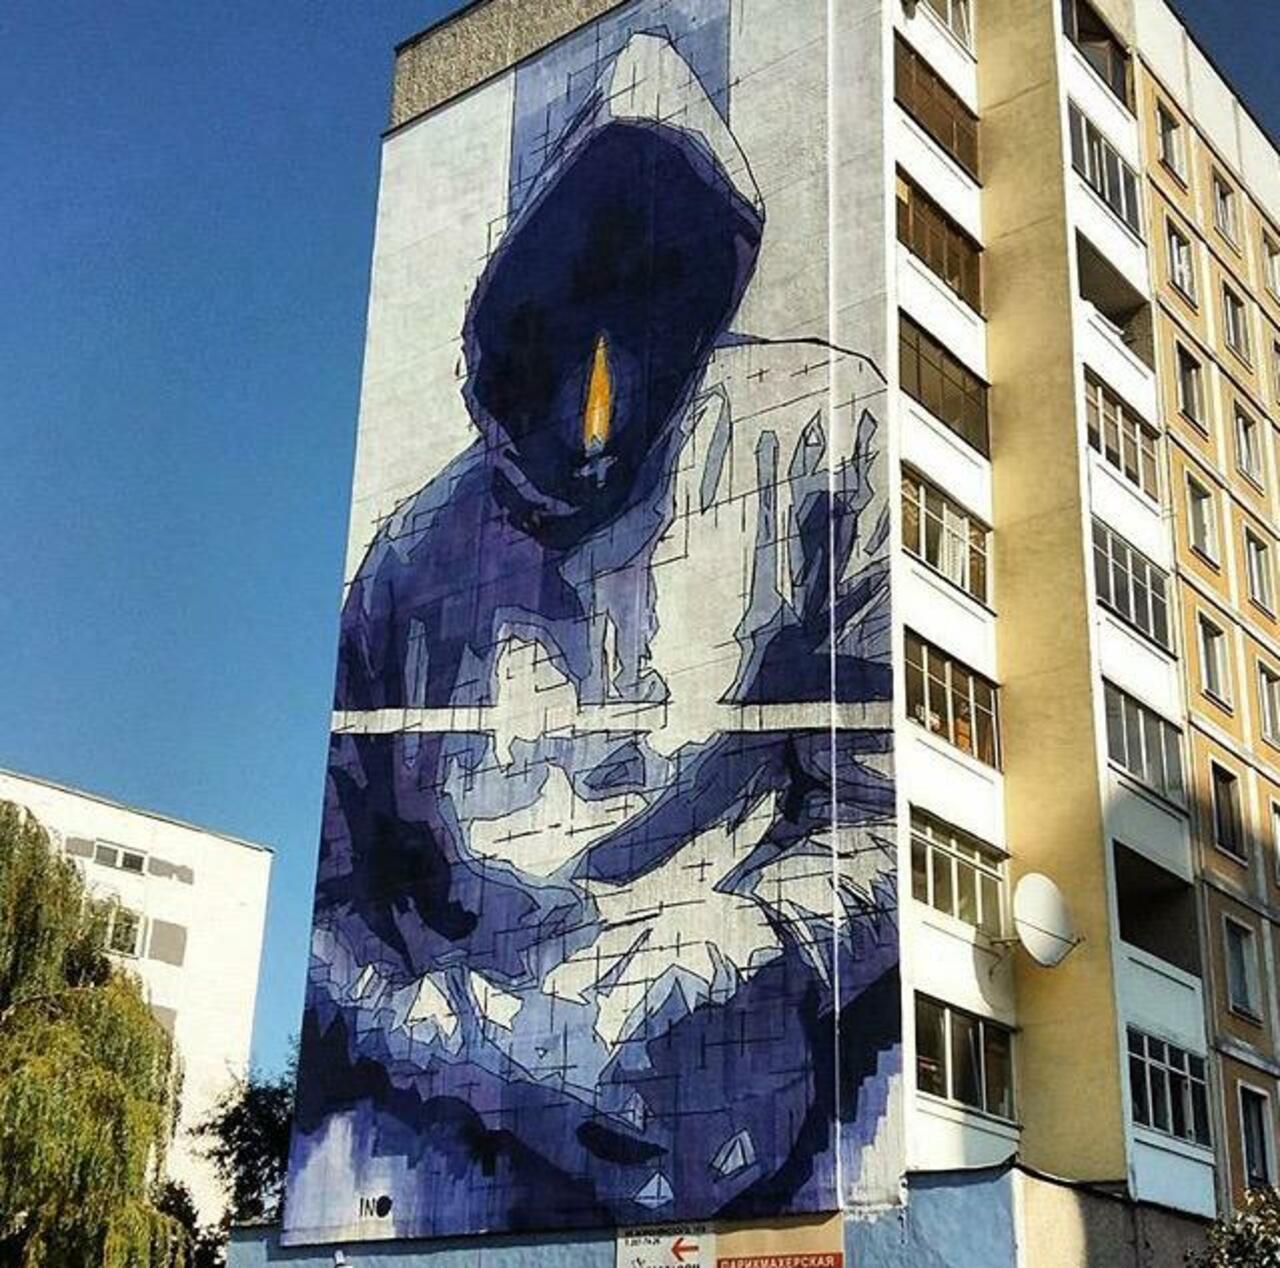 'Man With No Name' 
New Street Art by iNO in Minsk, Belarus 

#art #graffiti #mural #streetart http://t.co/8MsU4bAgDT